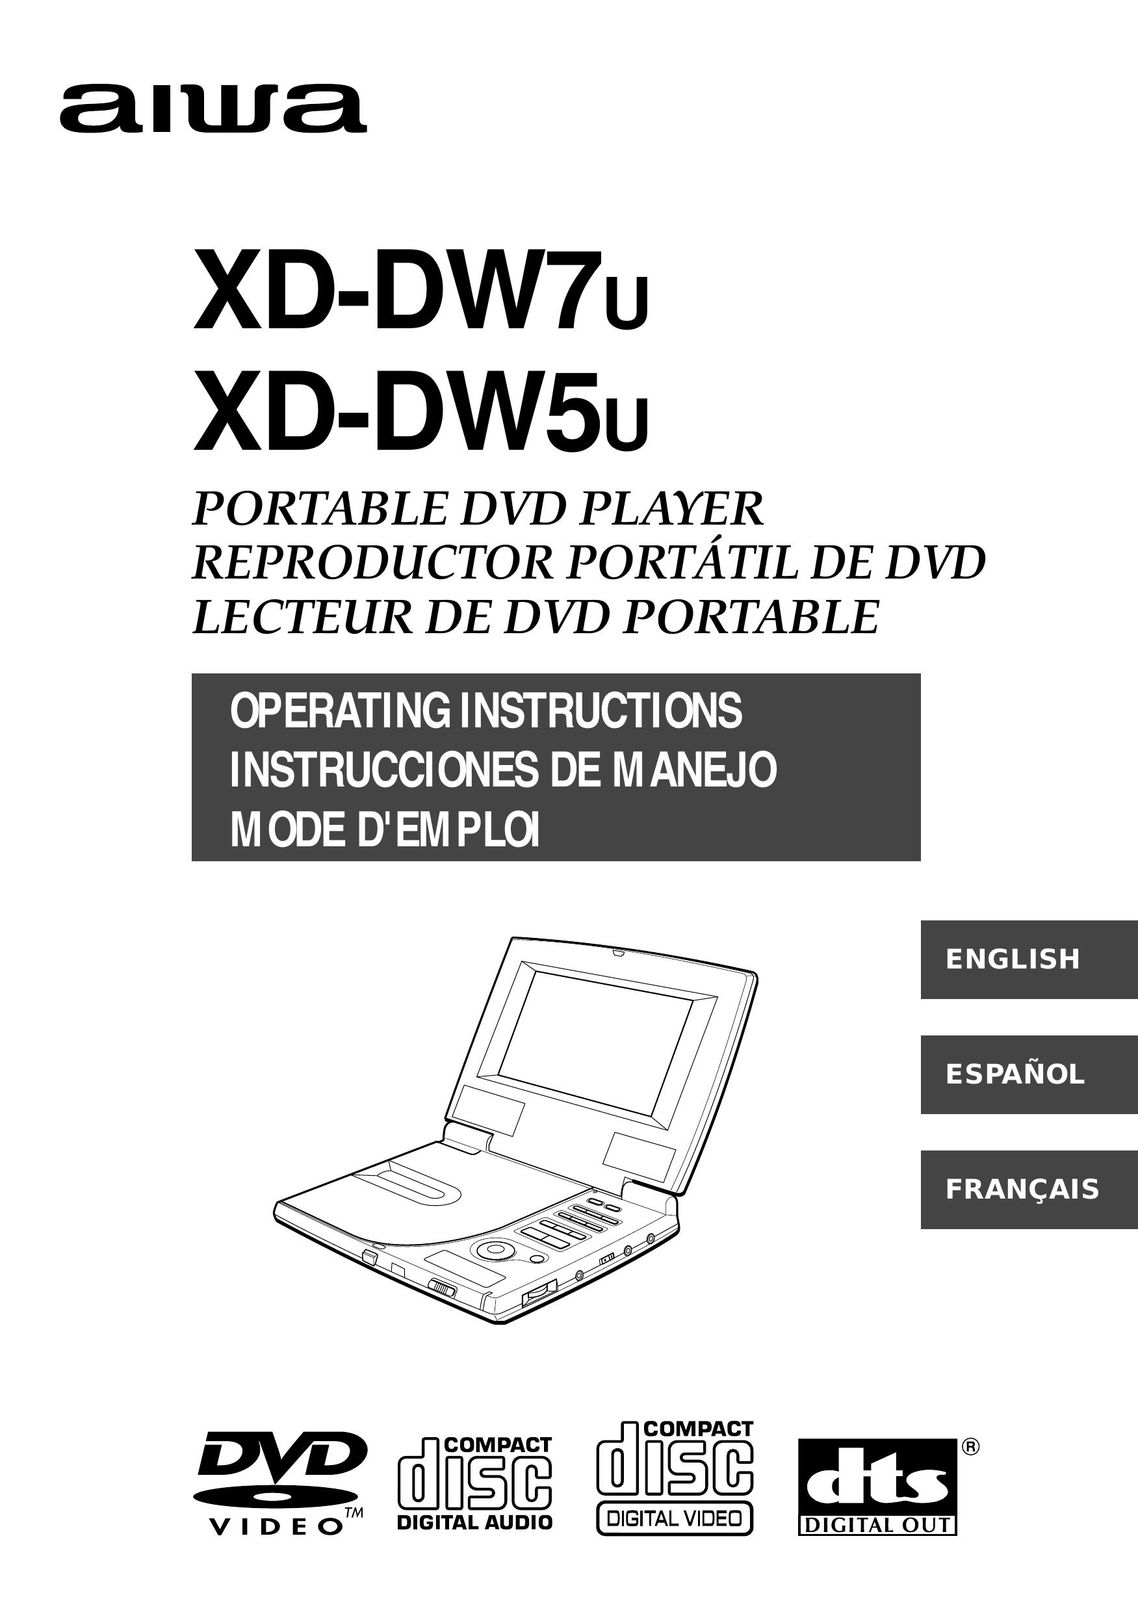 Aiwa XD-DW5U DVD Player User Manual